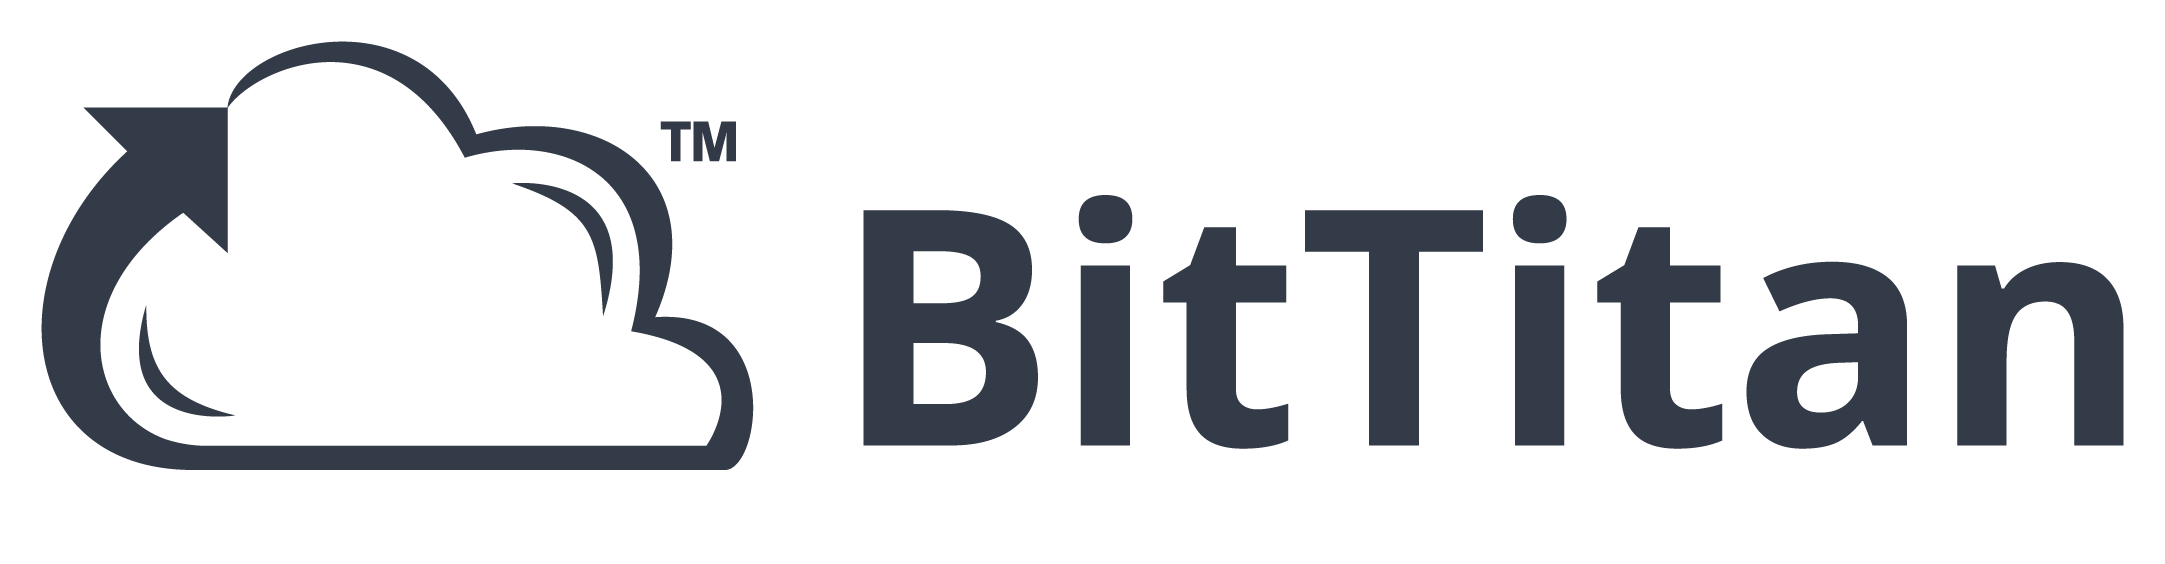 BitTitan Logo - BitTitan. The ChannelPro Network